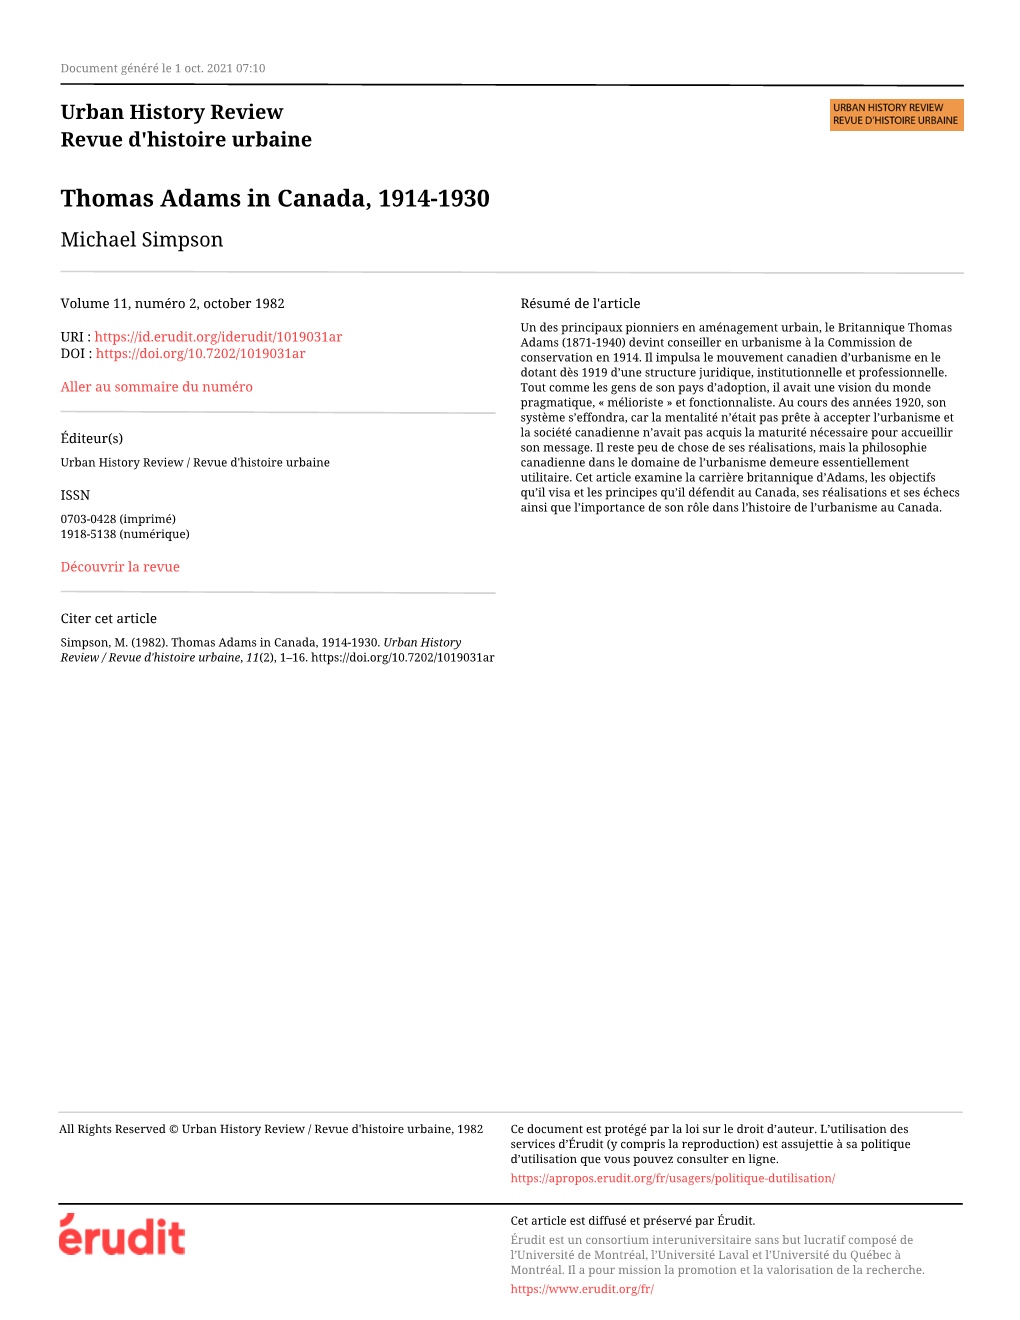 Thomas Adams in Canada, 1914-1930 Michael Simpson